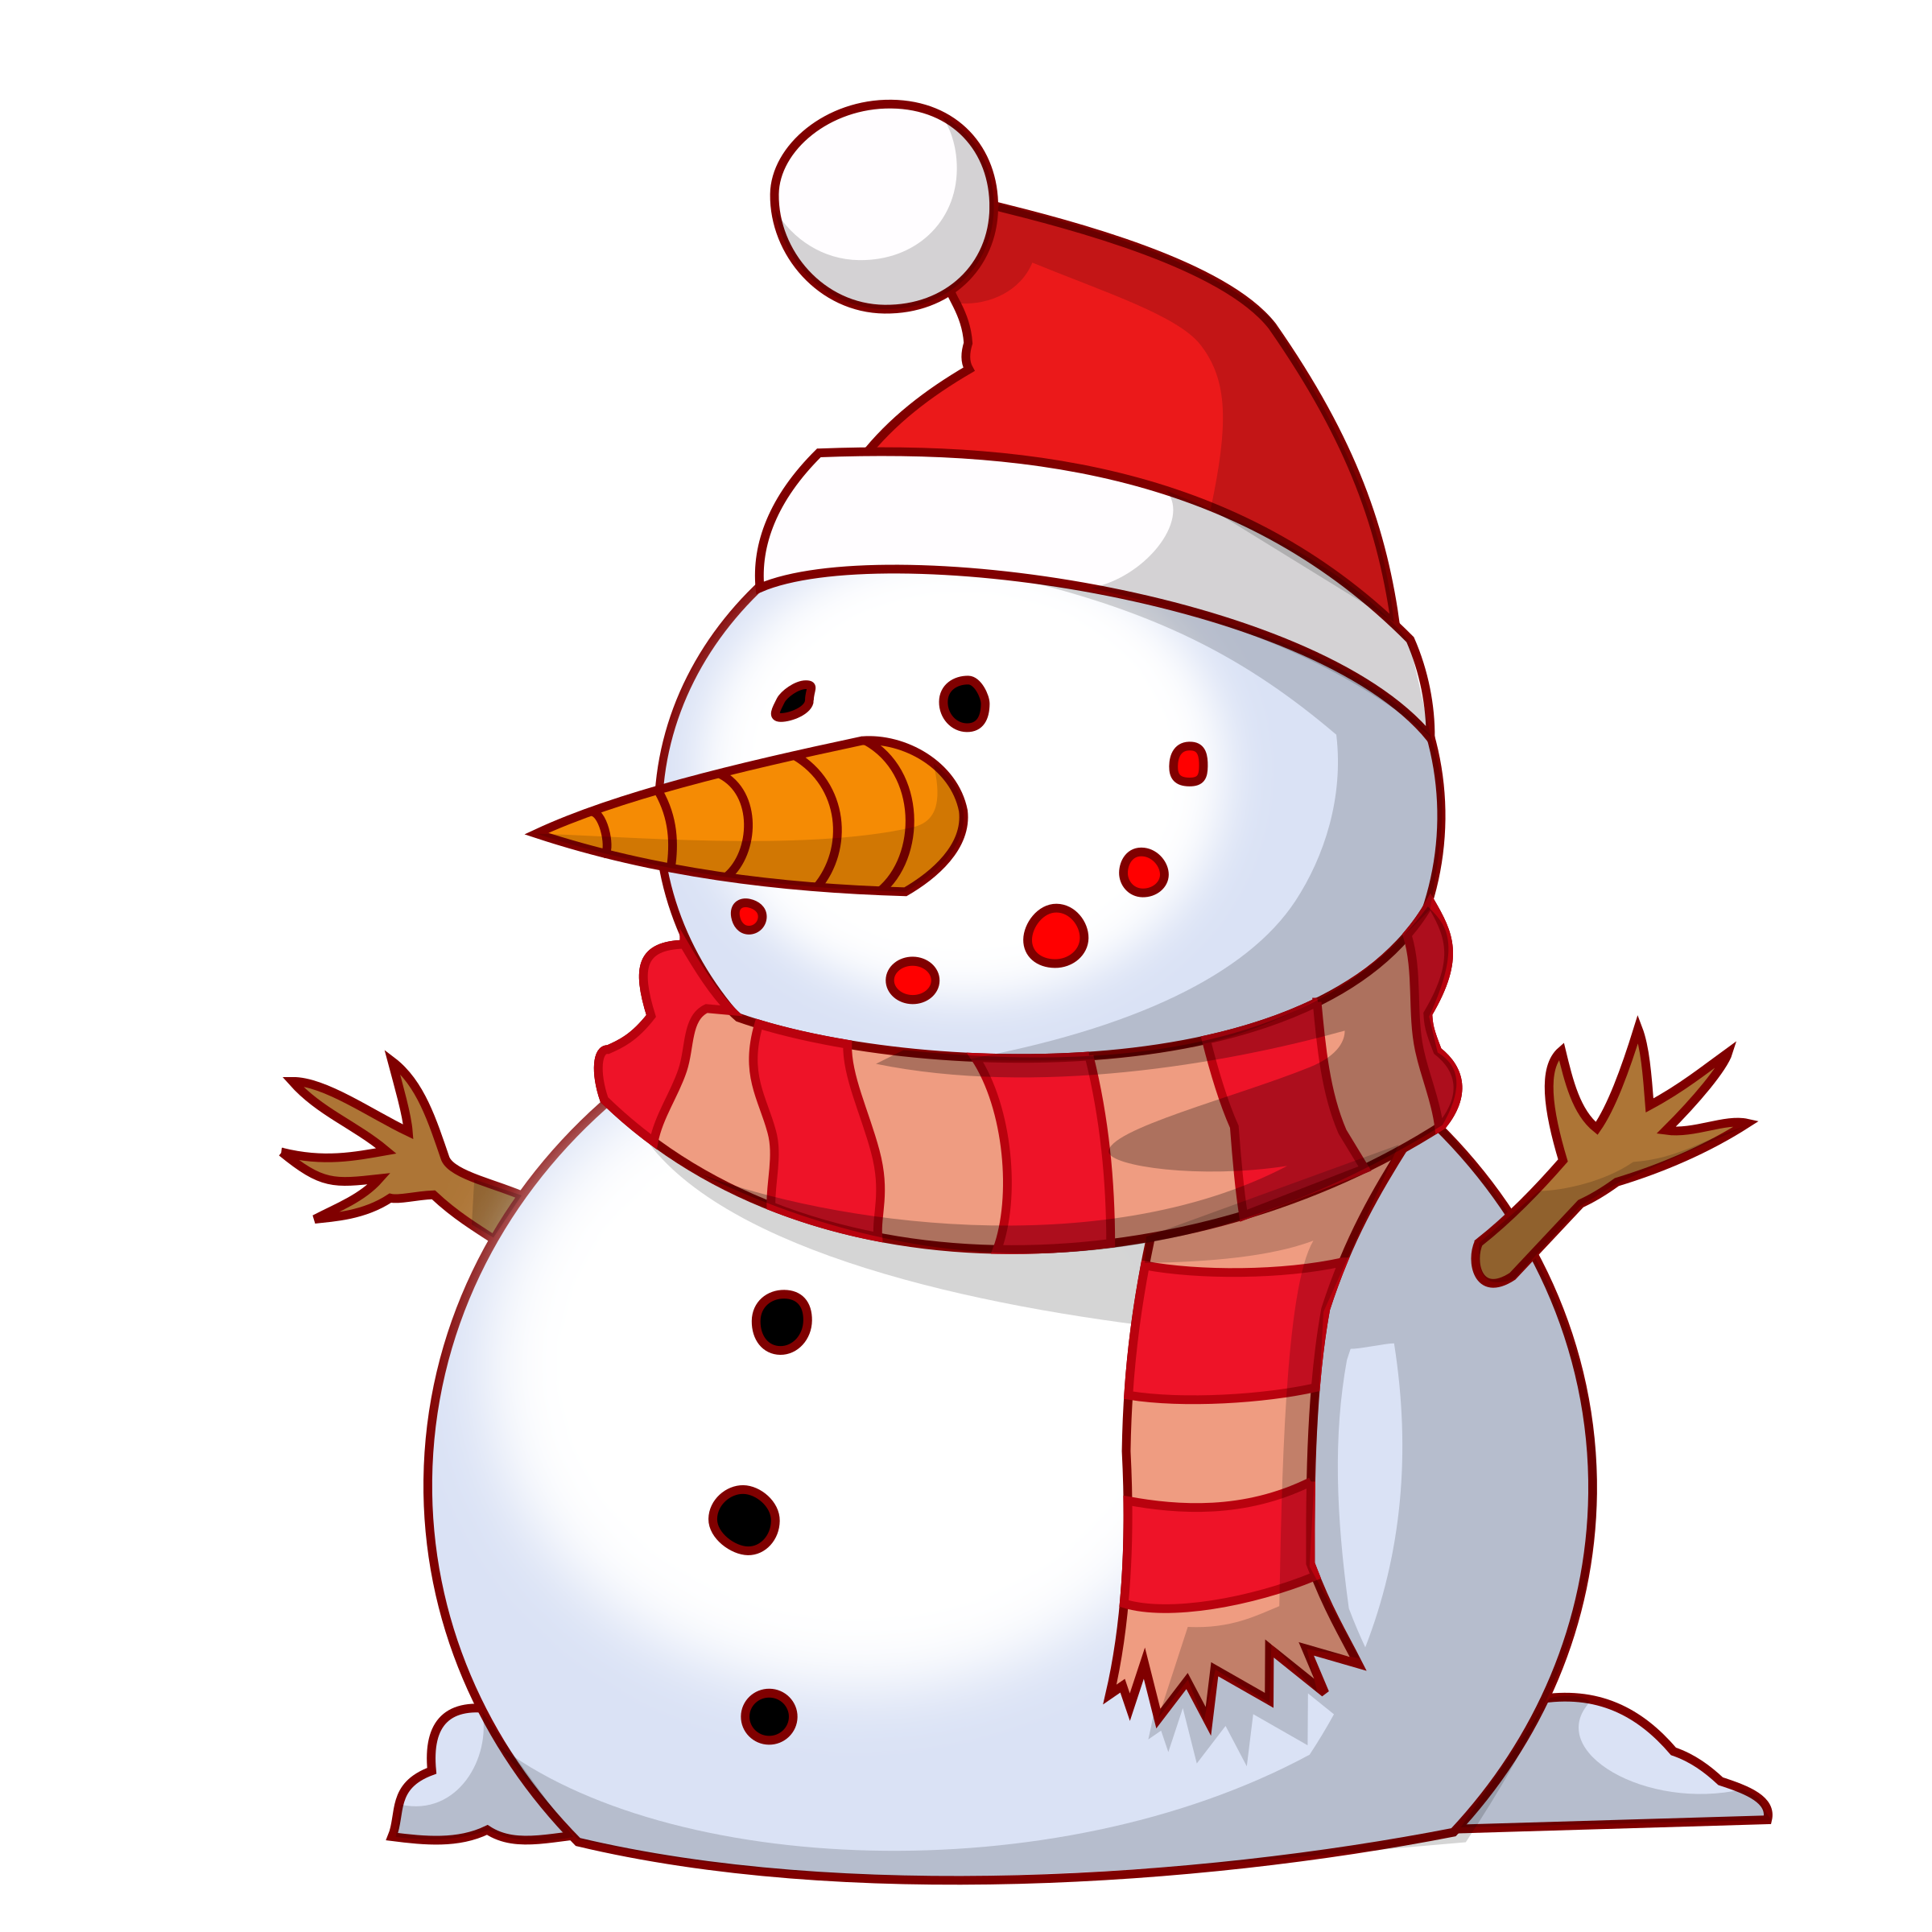 free vector clipart snowman - photo #42